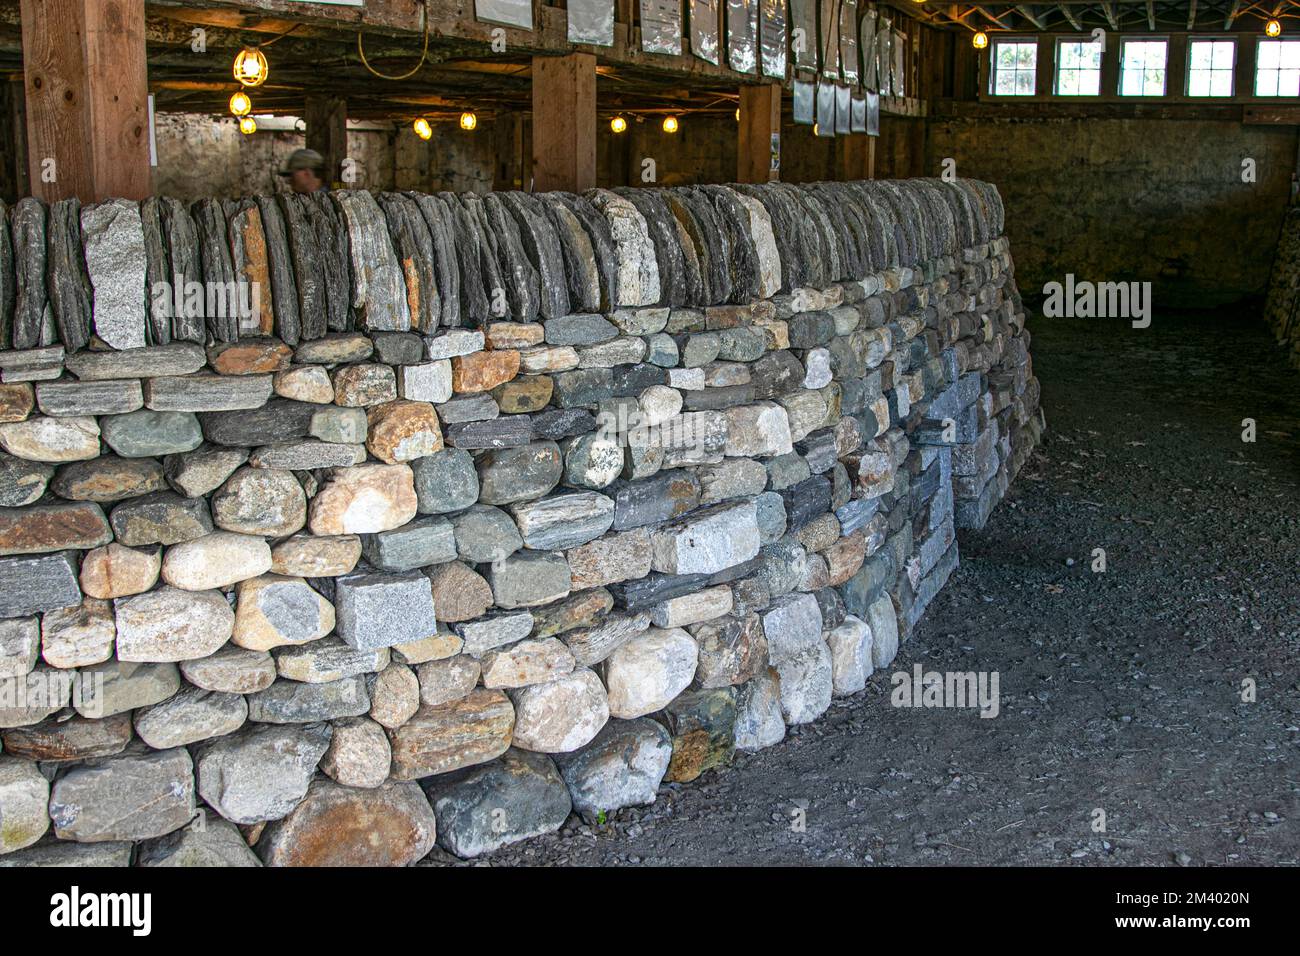 USA, Vermont, Brattleboro, Scott farm, landmark Trust, Stone Foundation, stone wall building, unmortared , stone walls, rock walls, teaching, learning Stock Photo